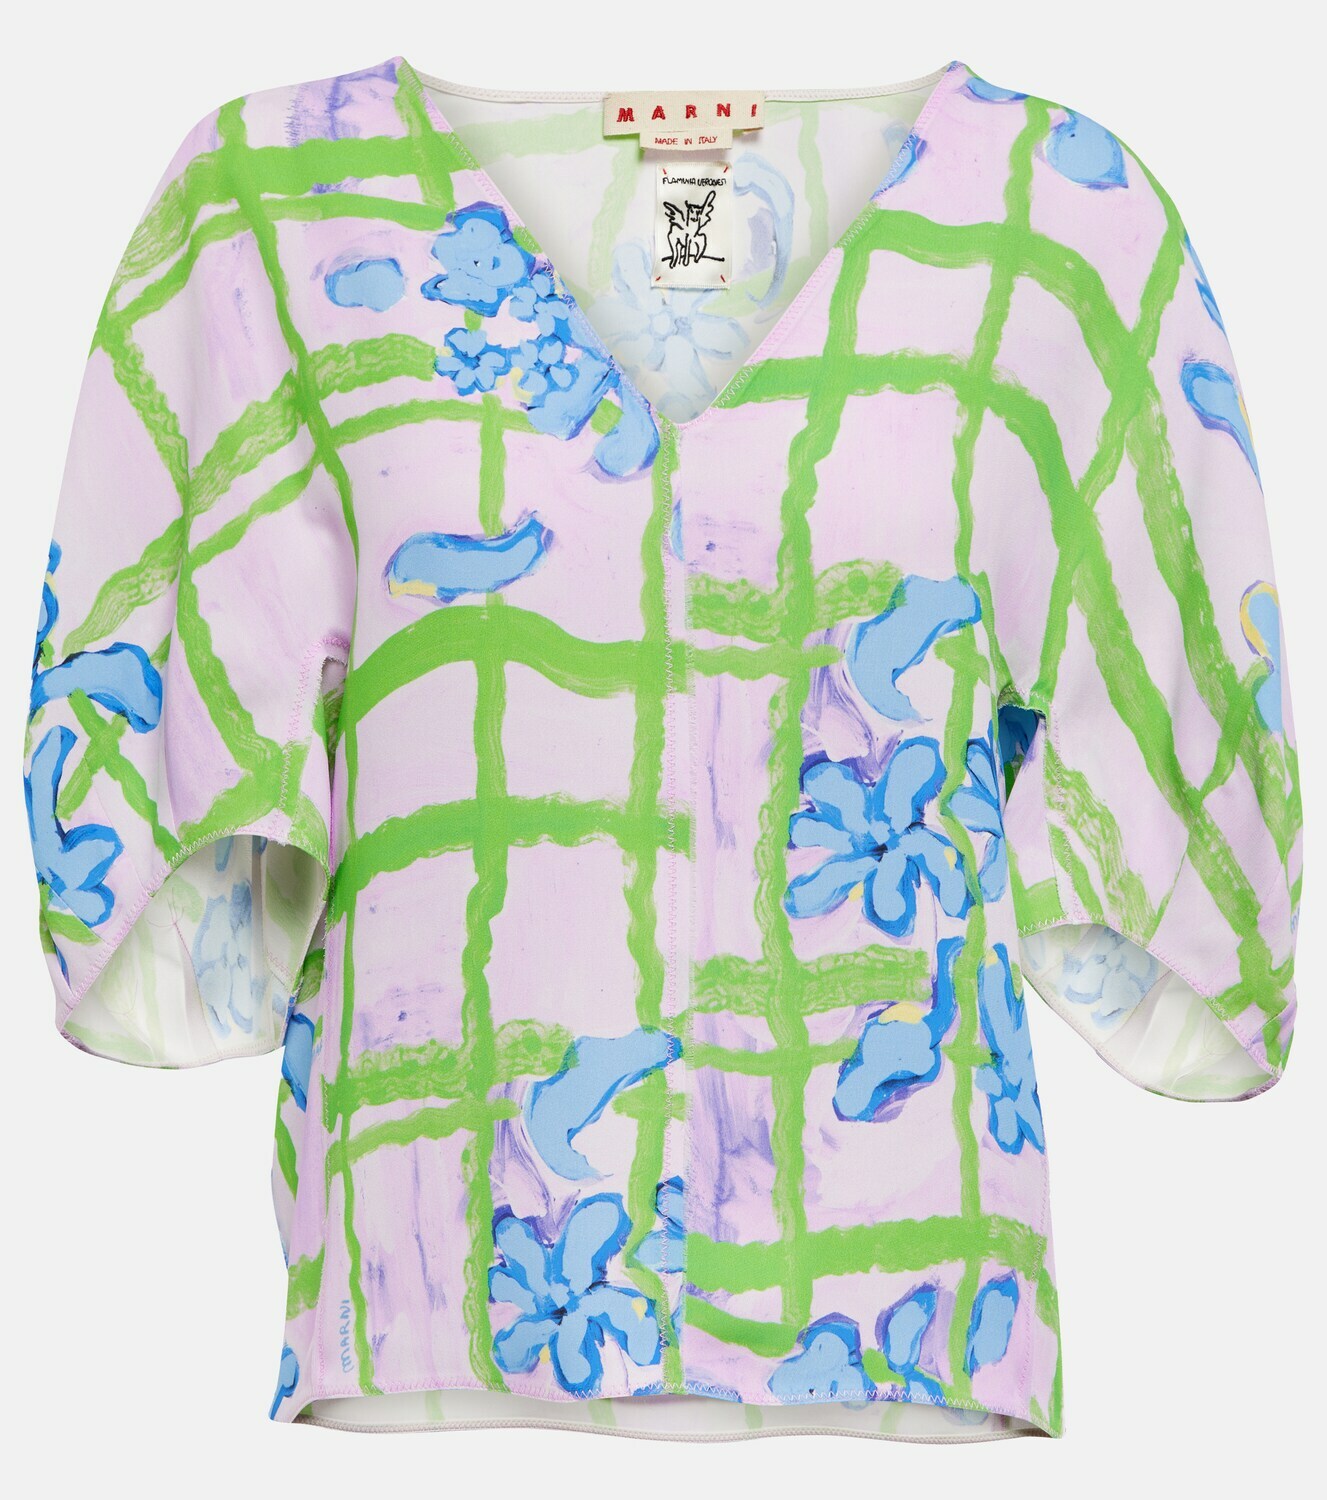 Marni - Floral blouse Marni